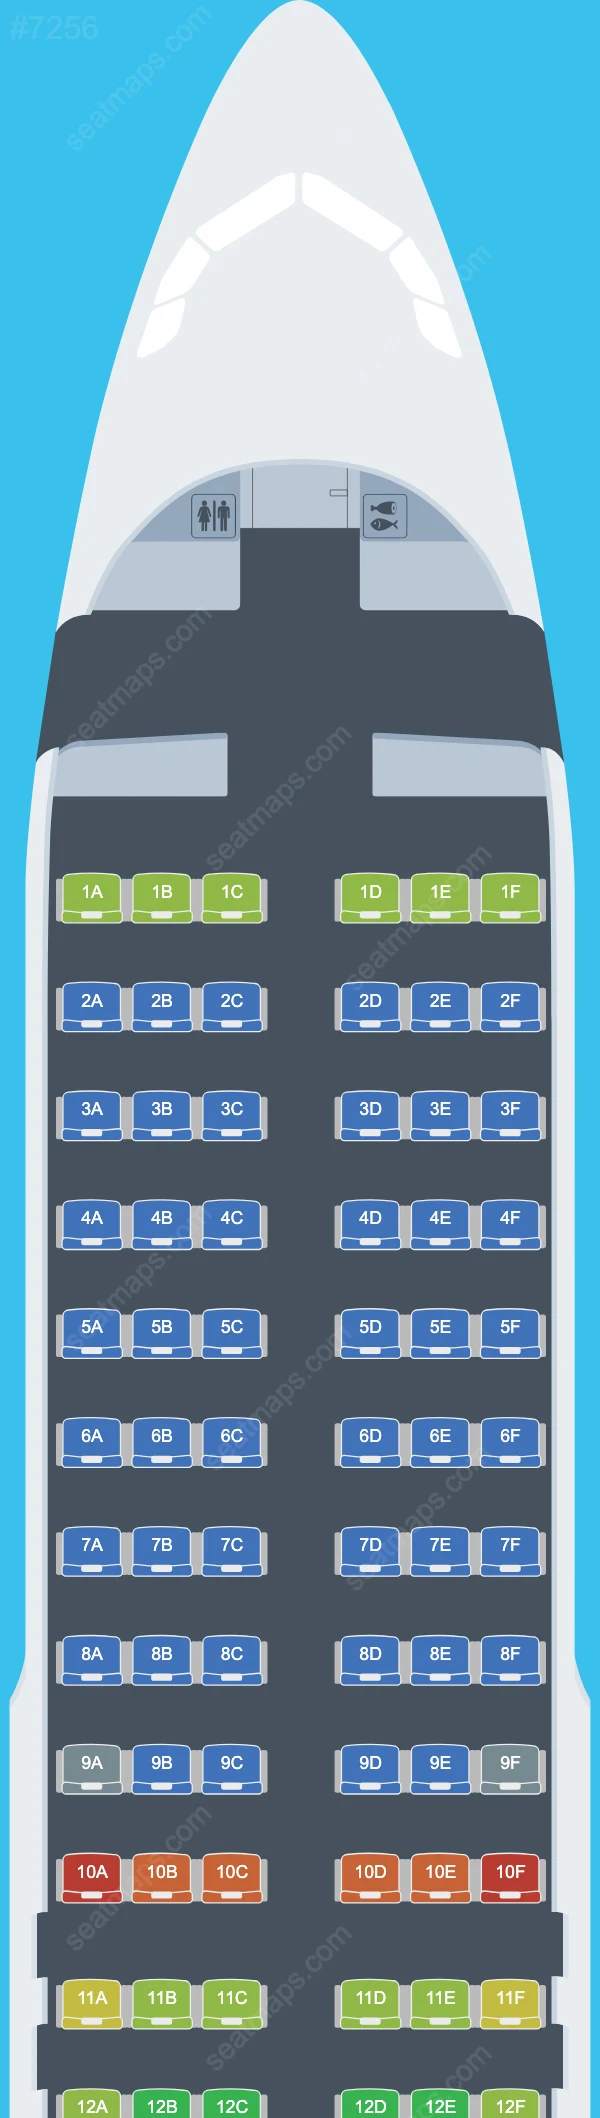 Bangkok Airways Airbus A320 Seat Maps A320-200